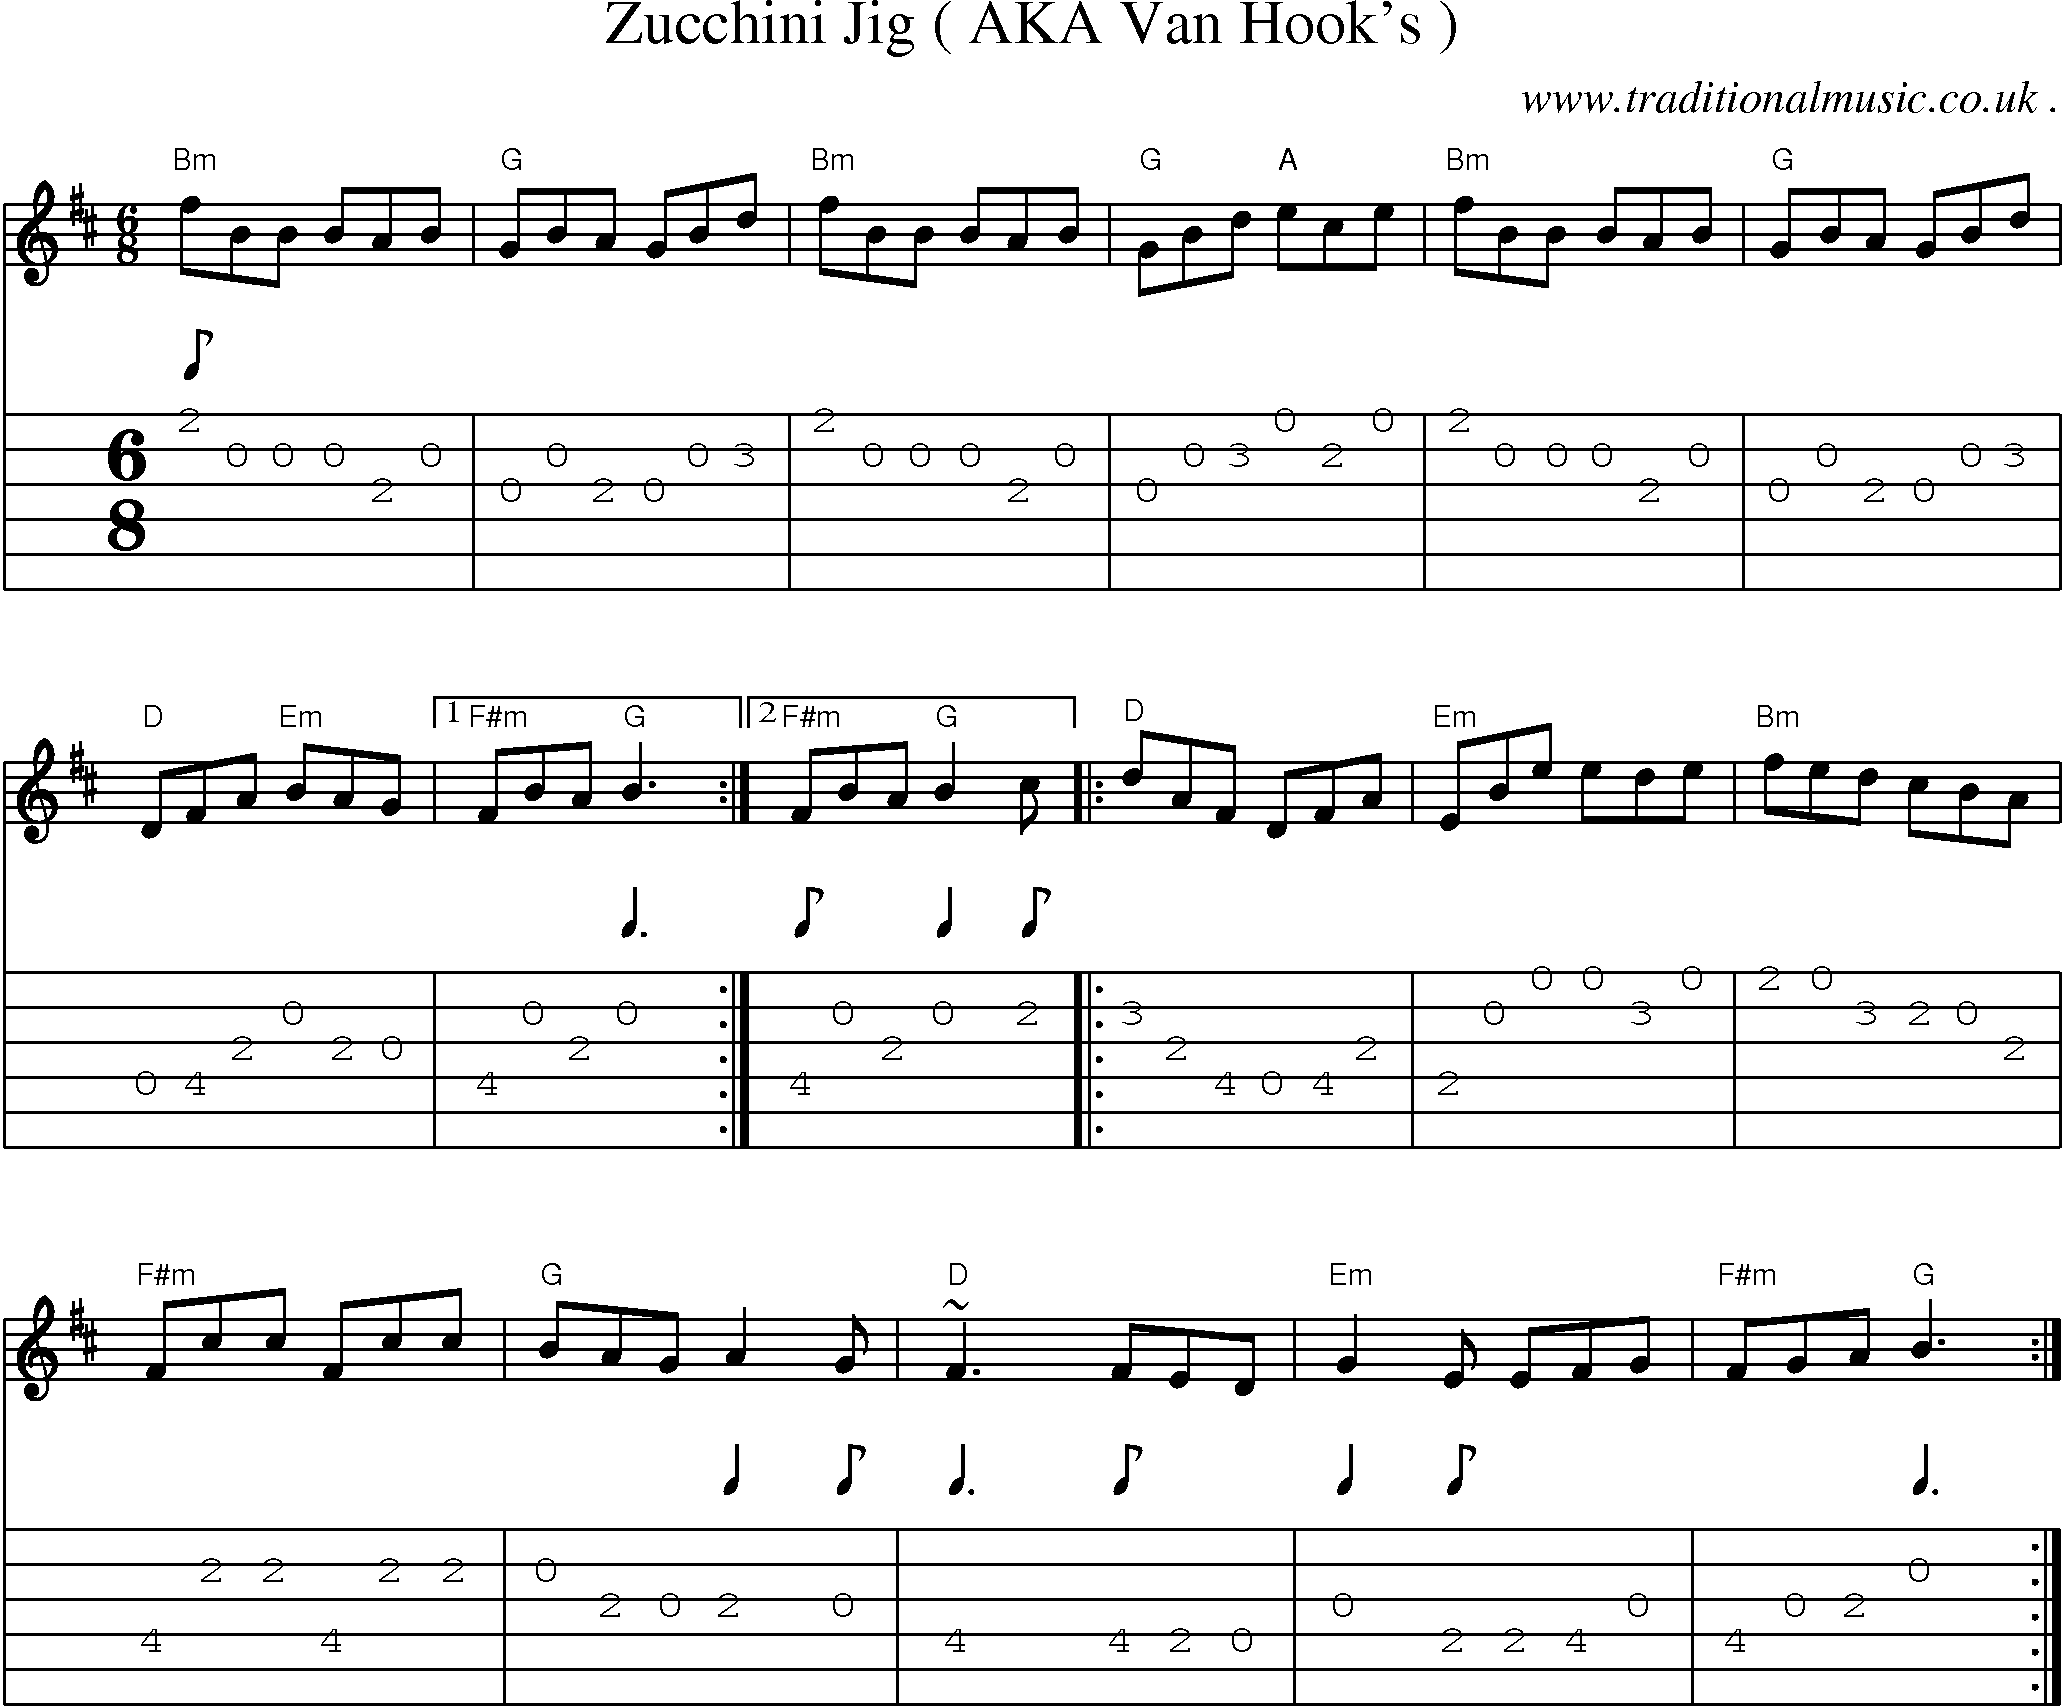 Music Score and Guitar Tabs for Zucchini Jig Aka Van Hooks